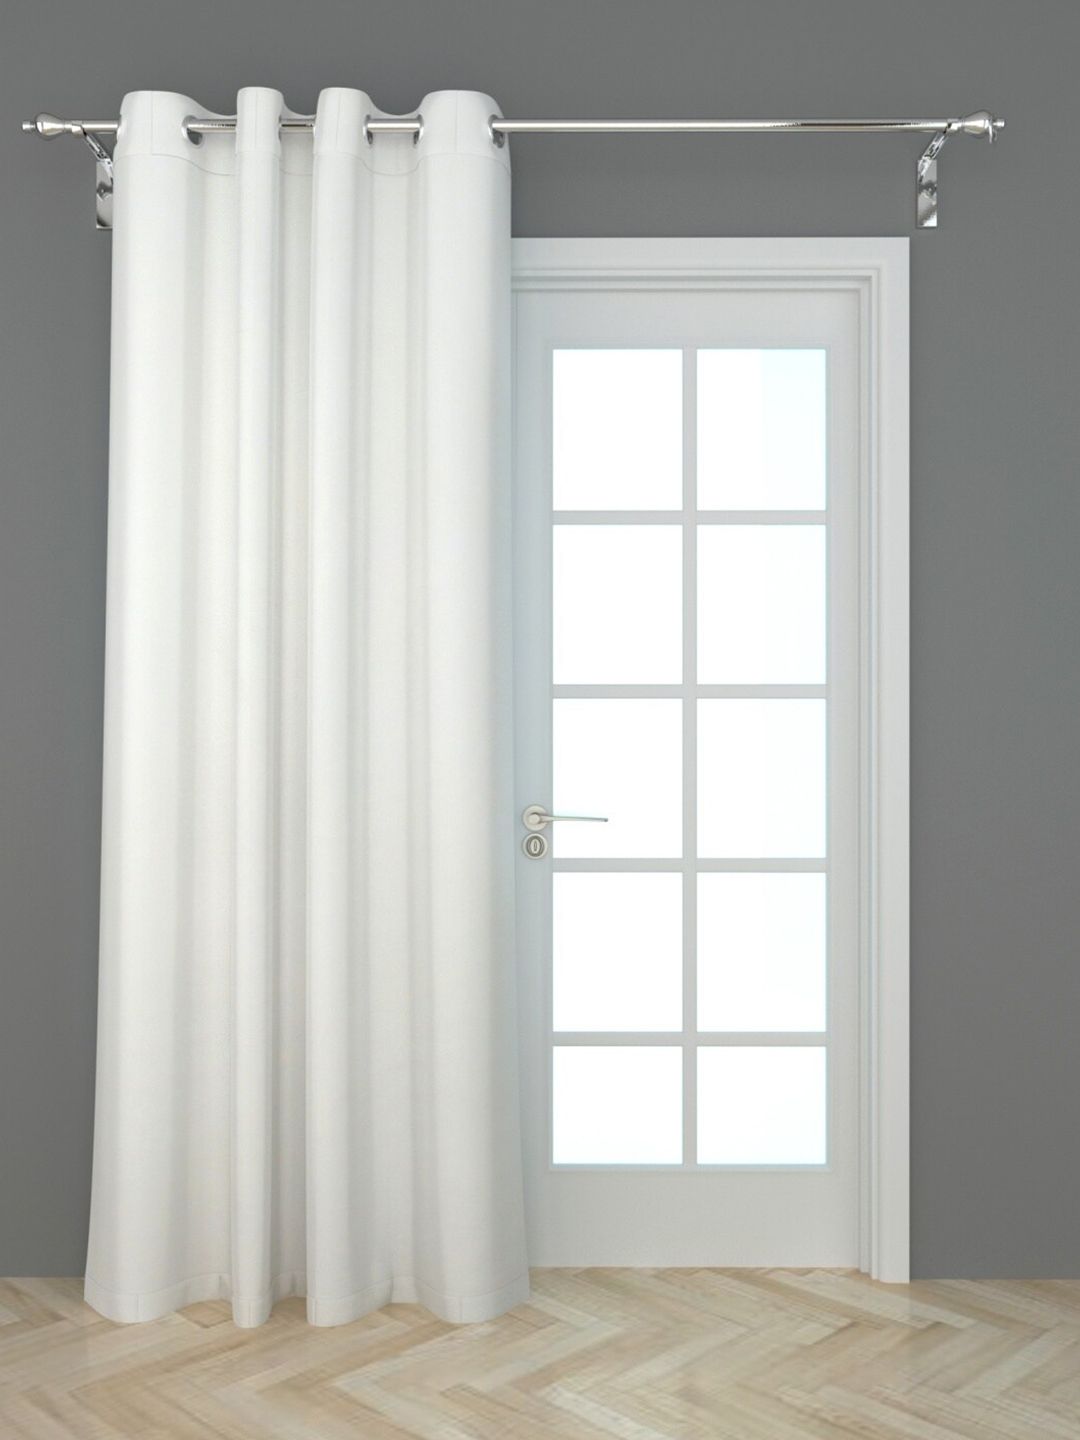 Home Centre White Door Curtain Price in India